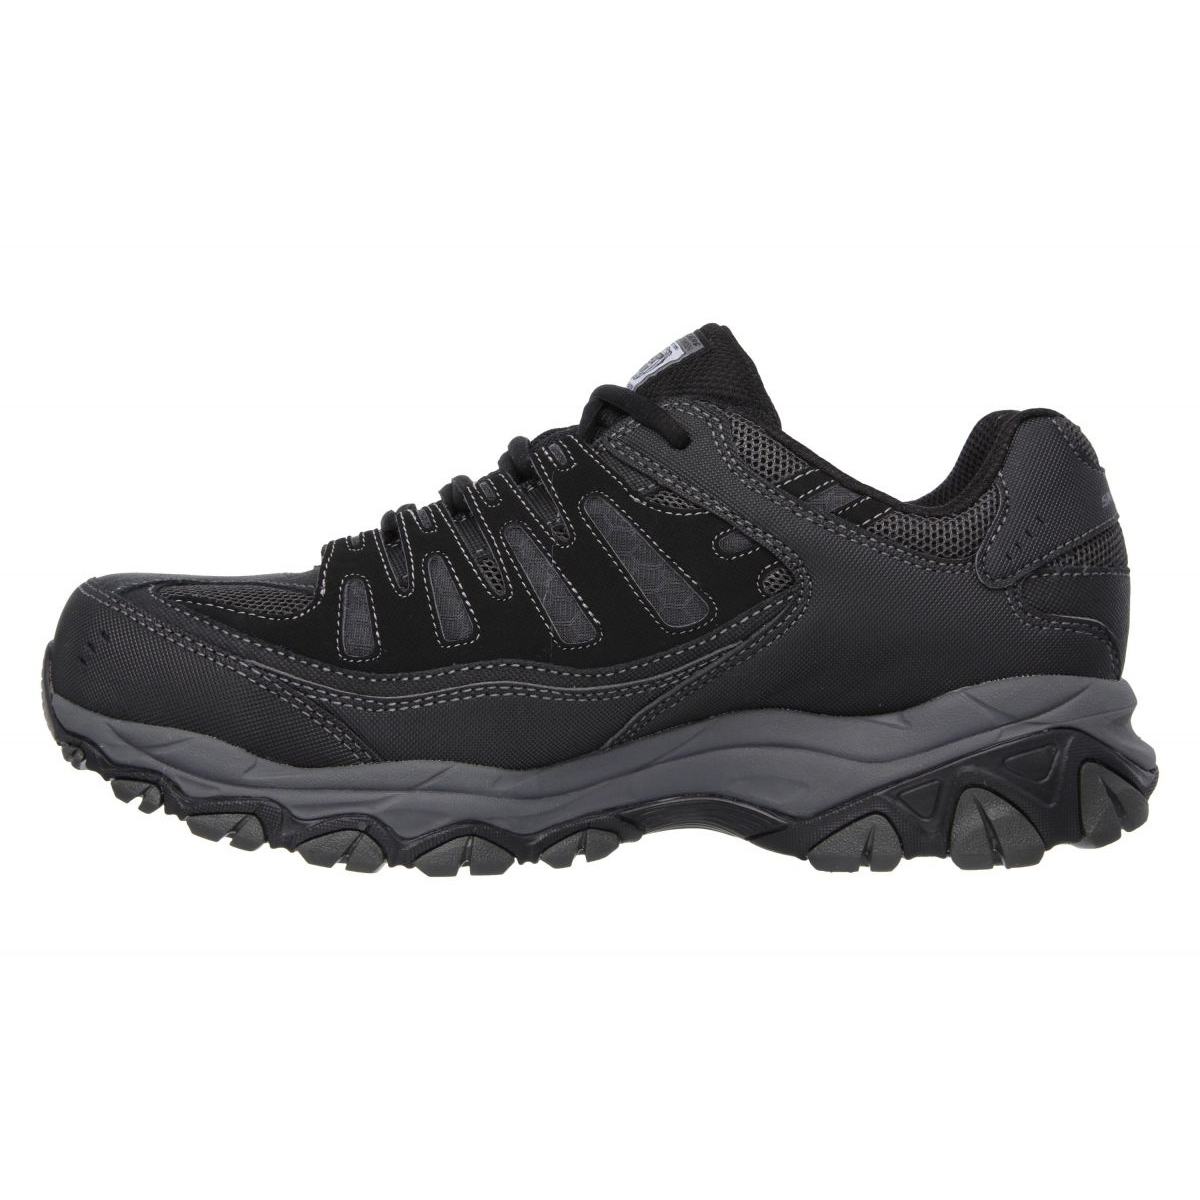 Skechers Men's Cankton-U Industrial Shoe 7 BLACK/CHARCOAL - BLACK/CHARCOAL, 7 Wide